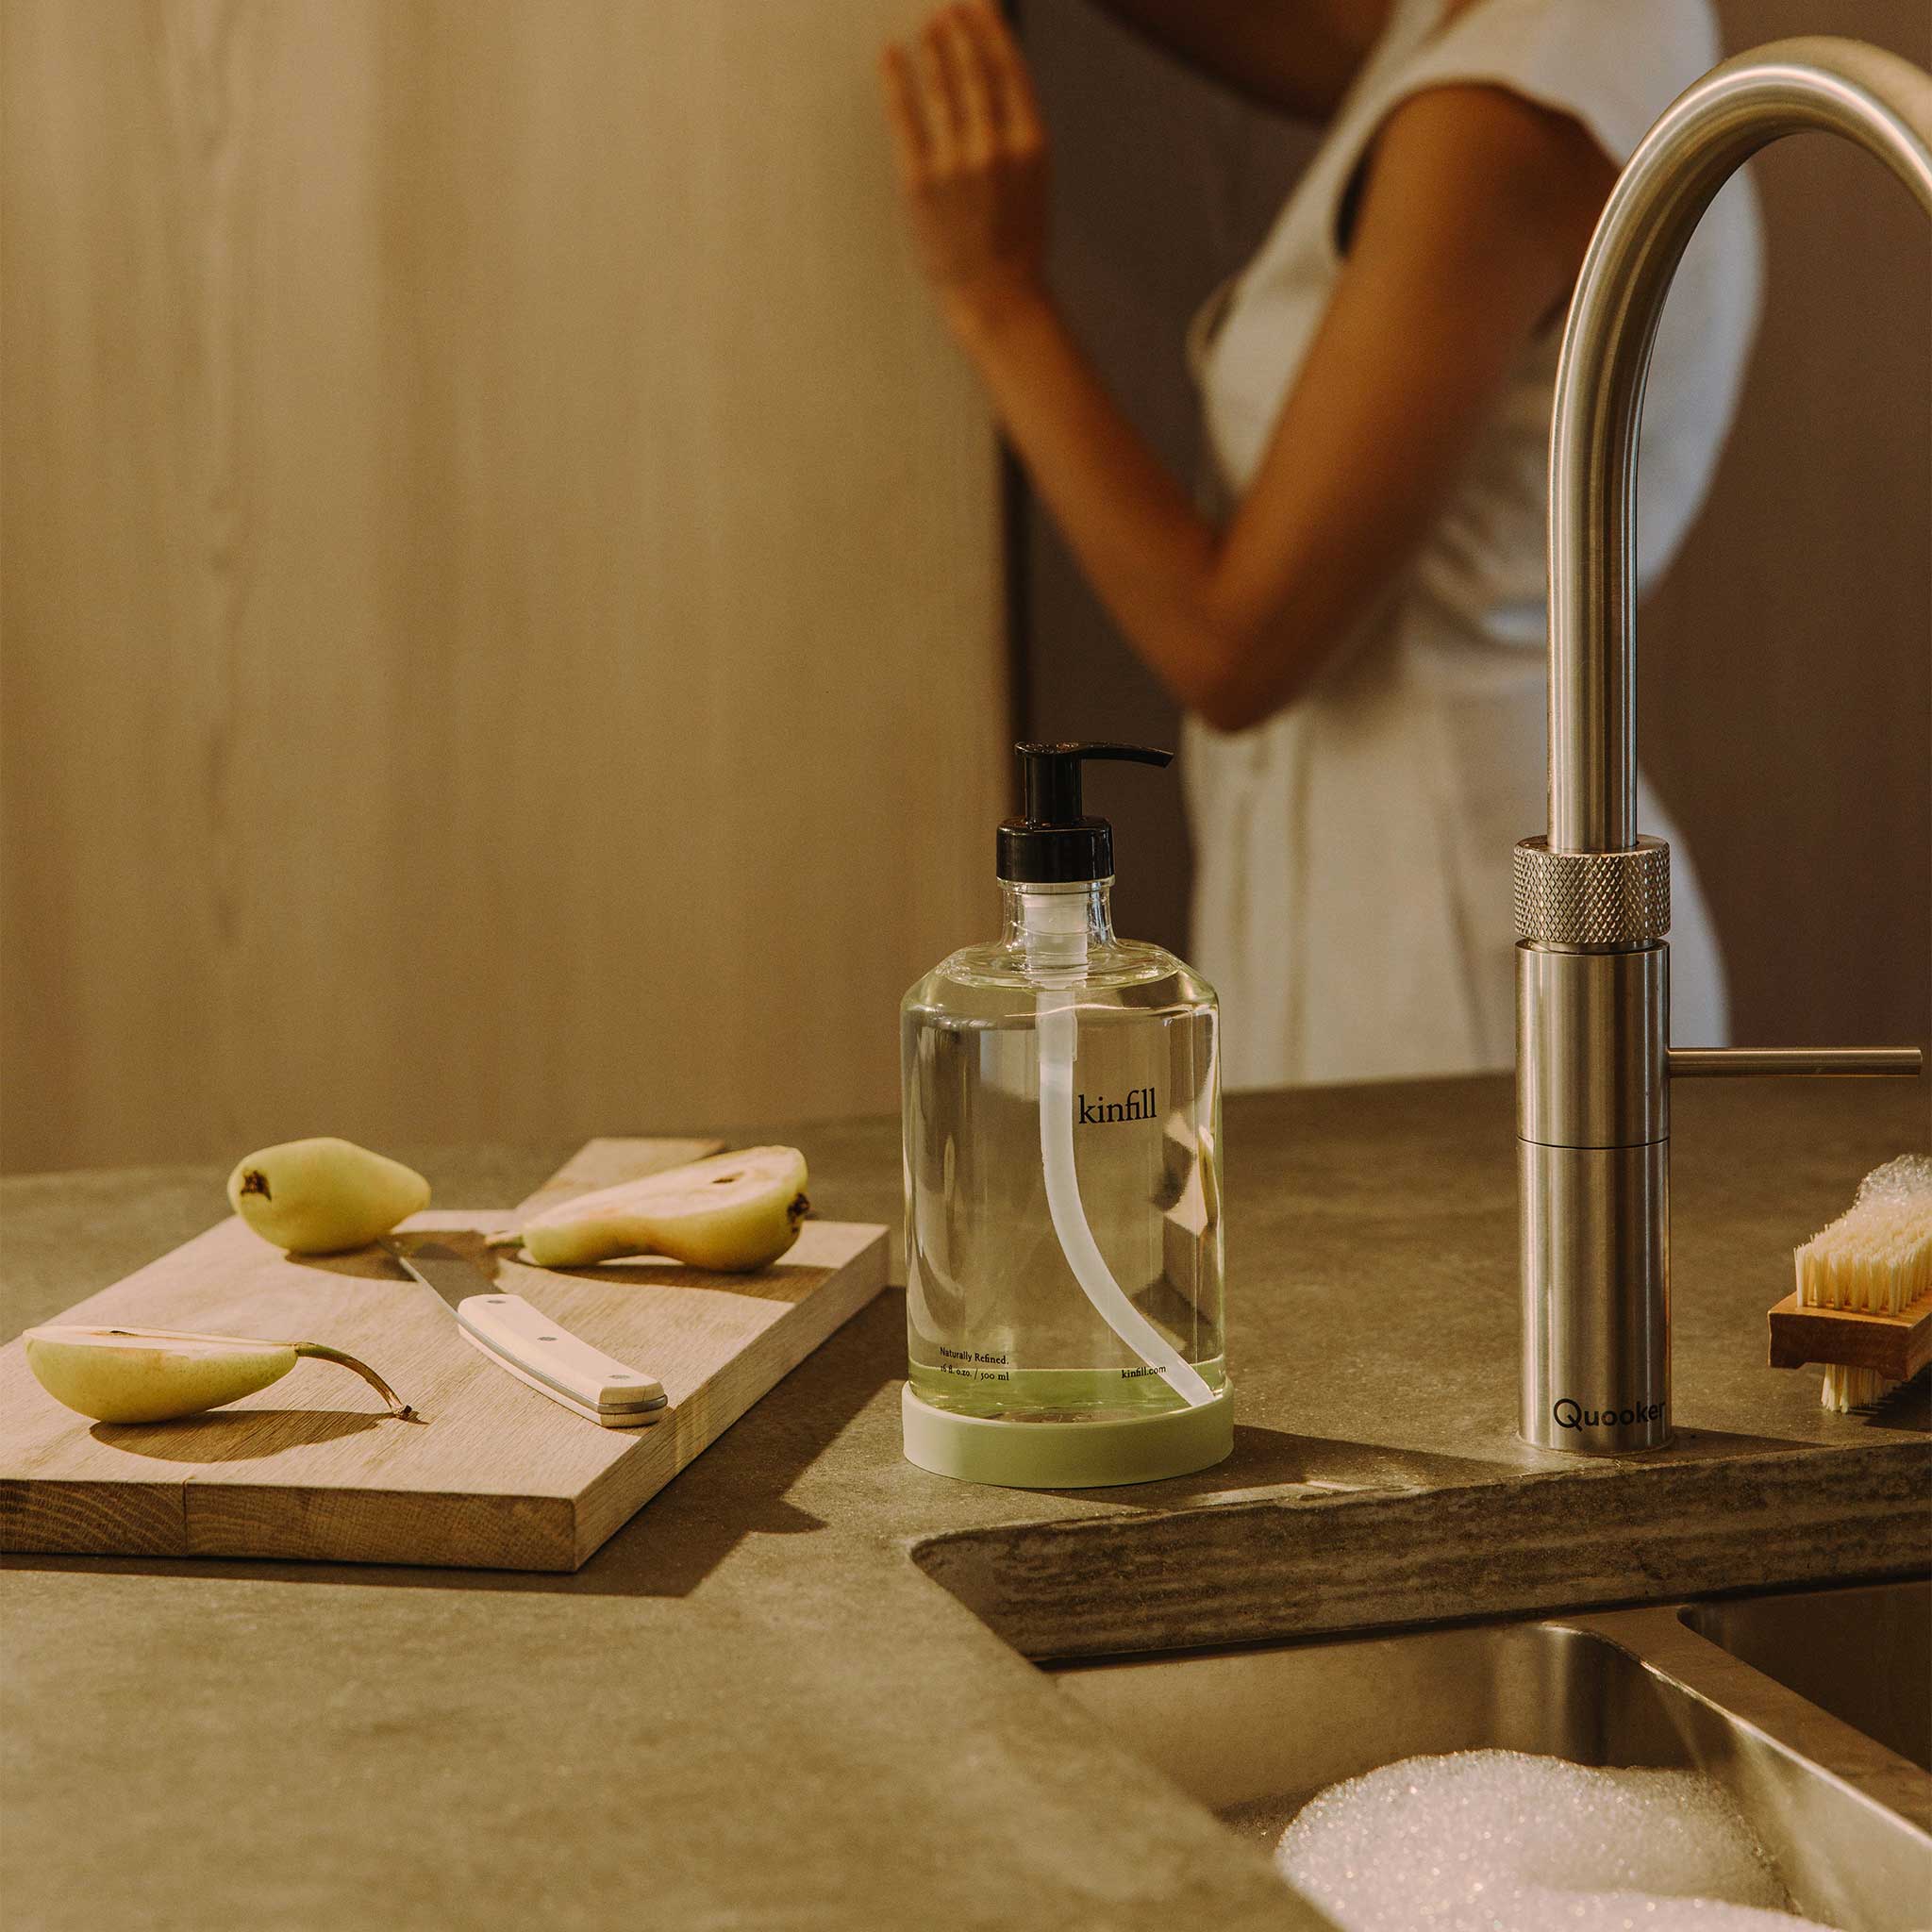 kinfill-dish-soap-design-sink-cooking.jpg